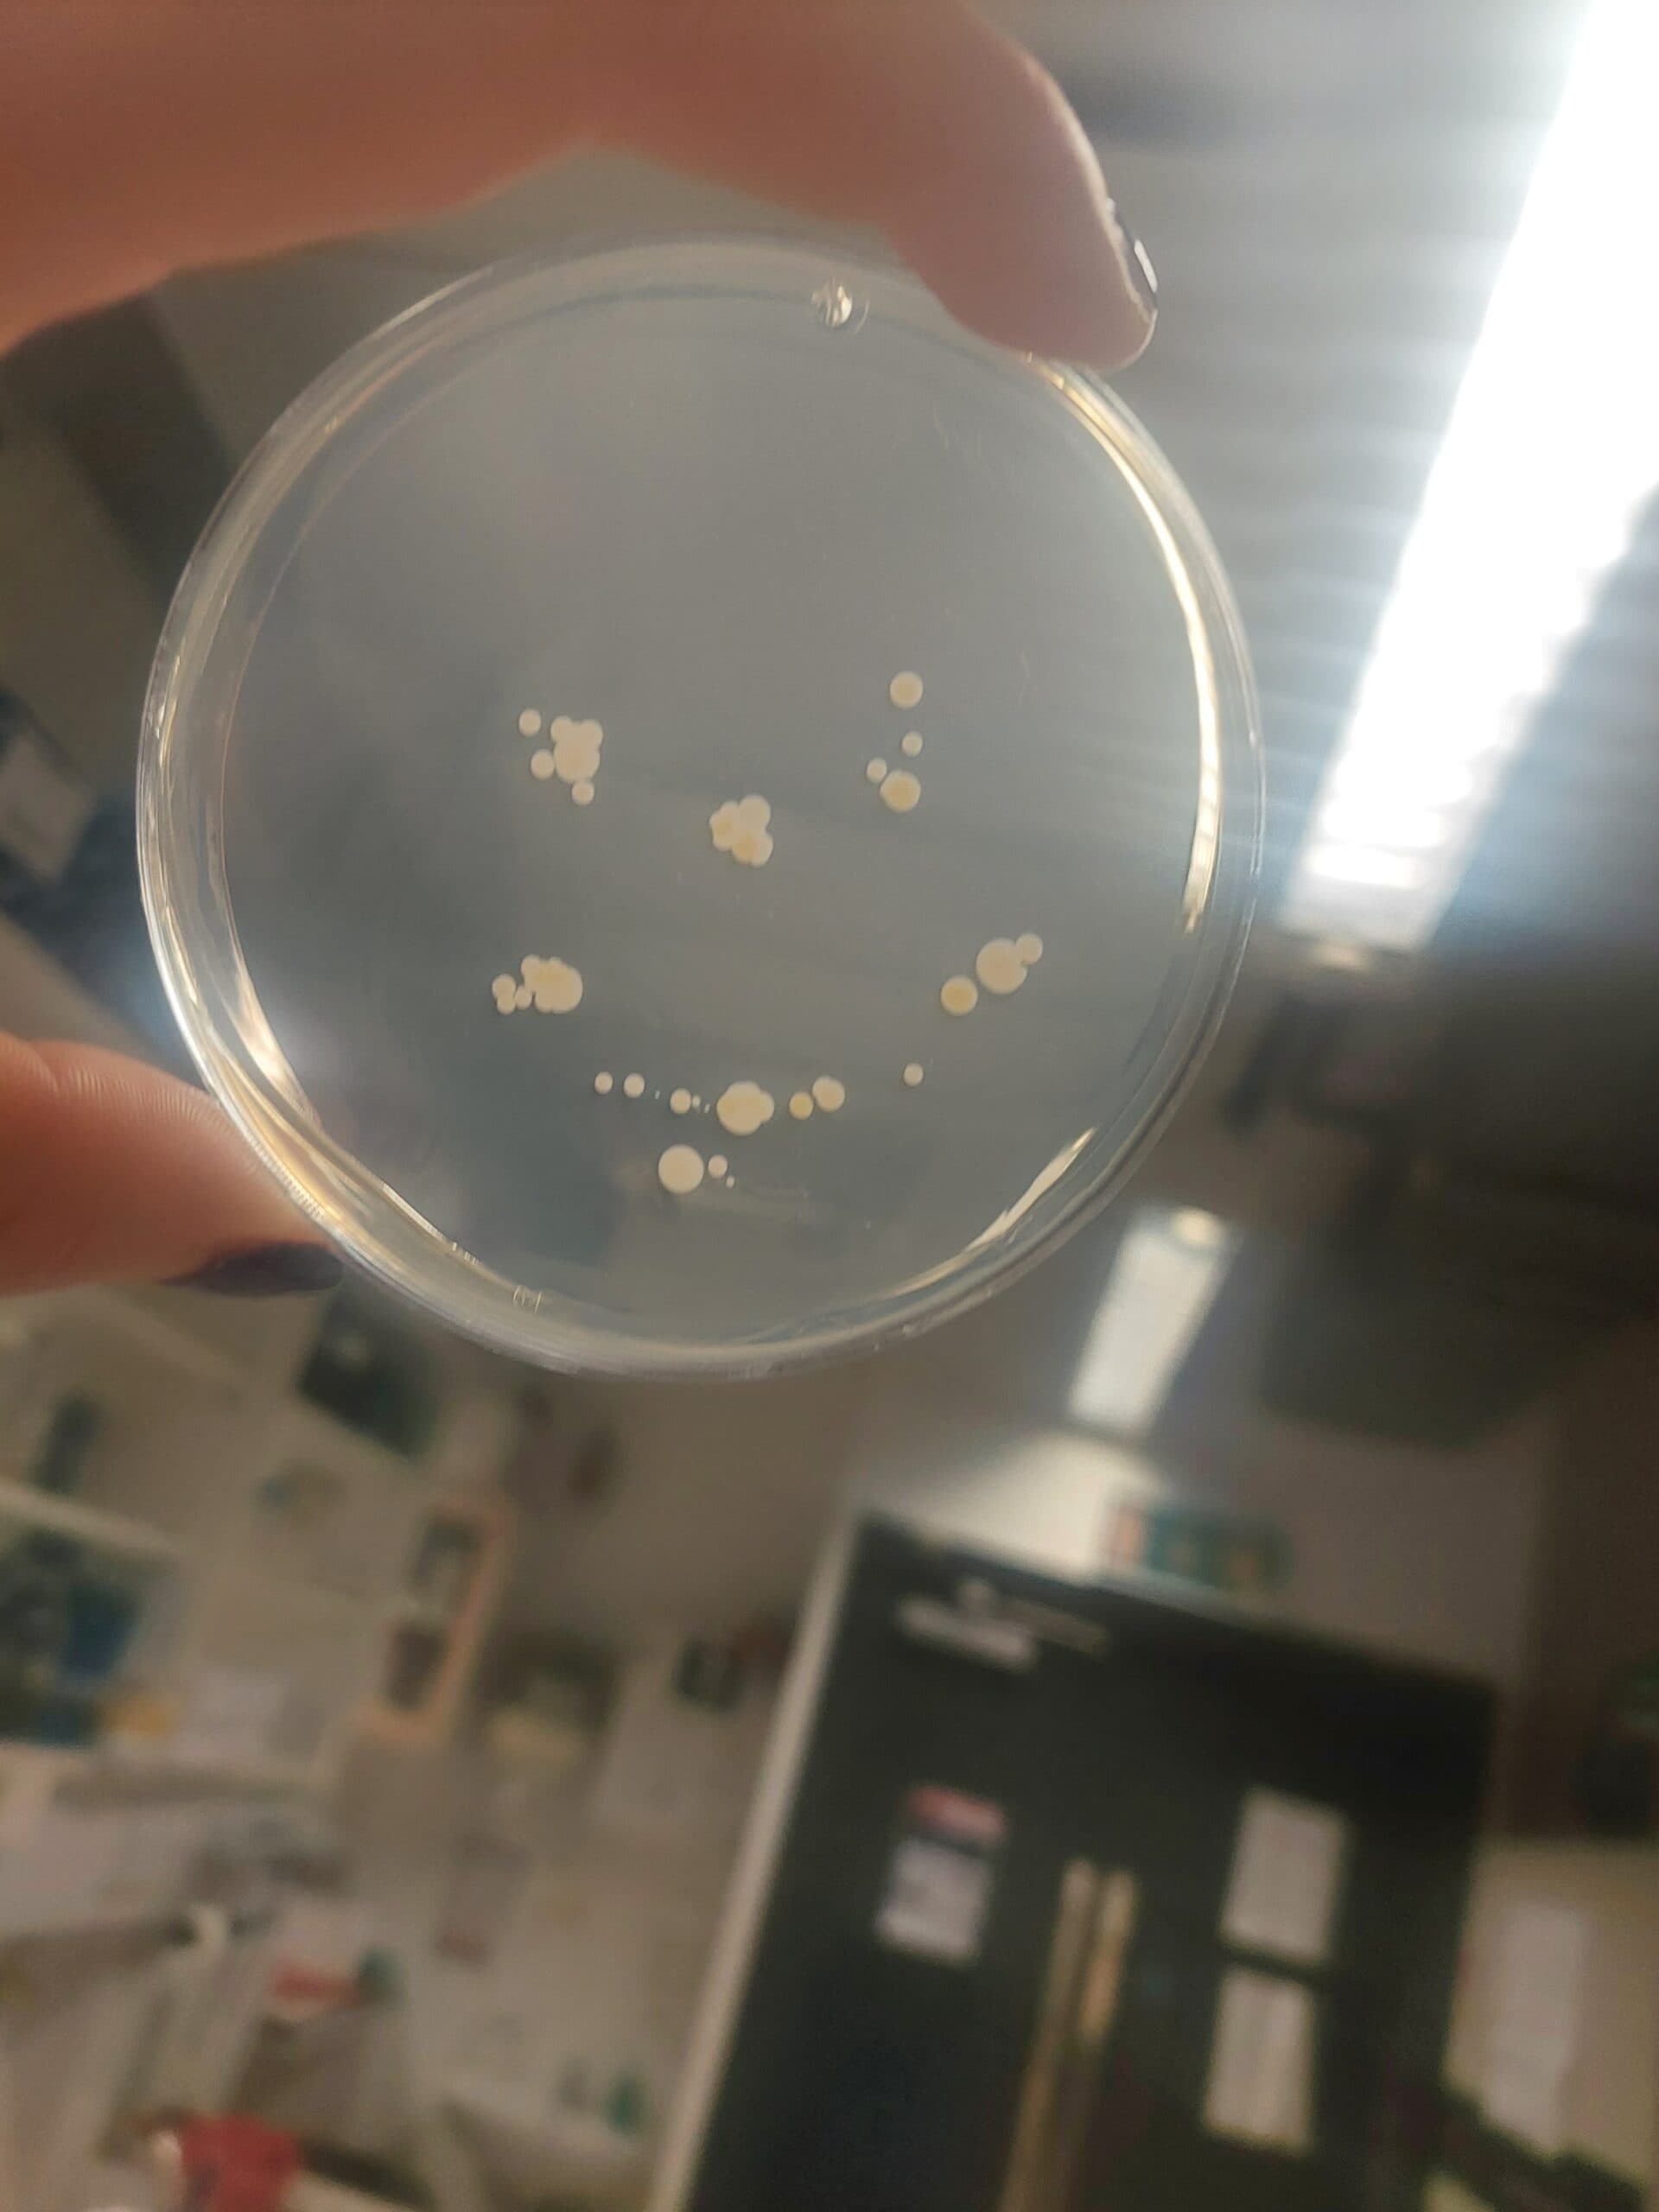 Petri dish showing fewer bacteria after hand washing.